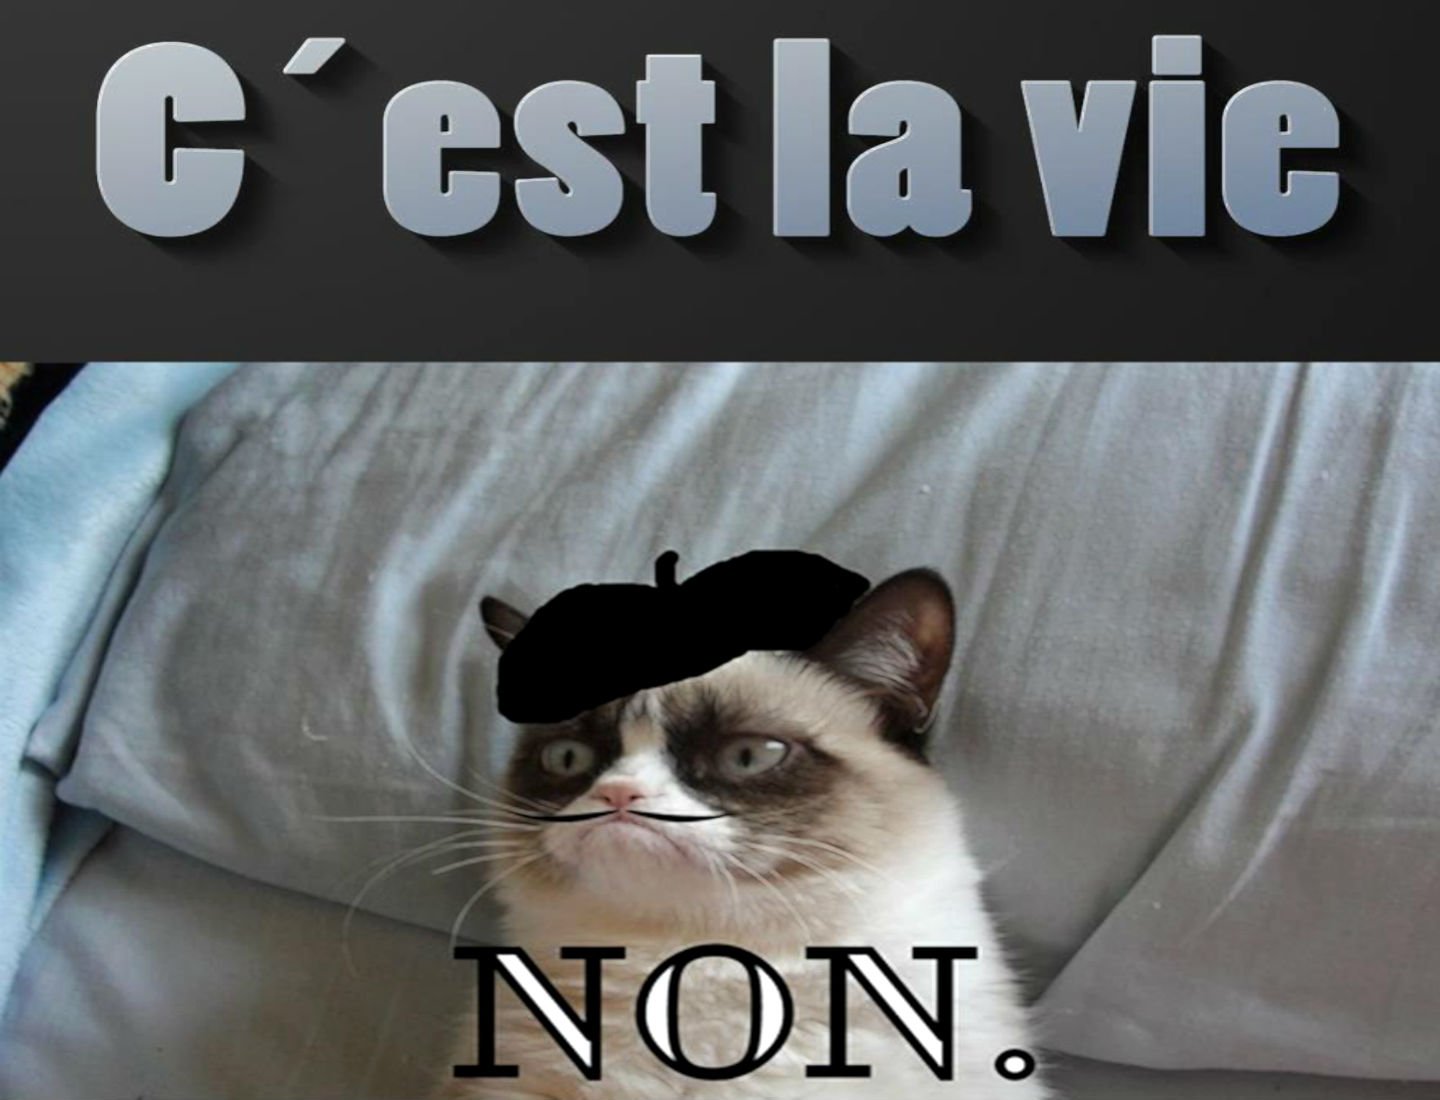 Cat meme quote funny humor grumpy french sadic wallpaper 1440x1100 1440x1100